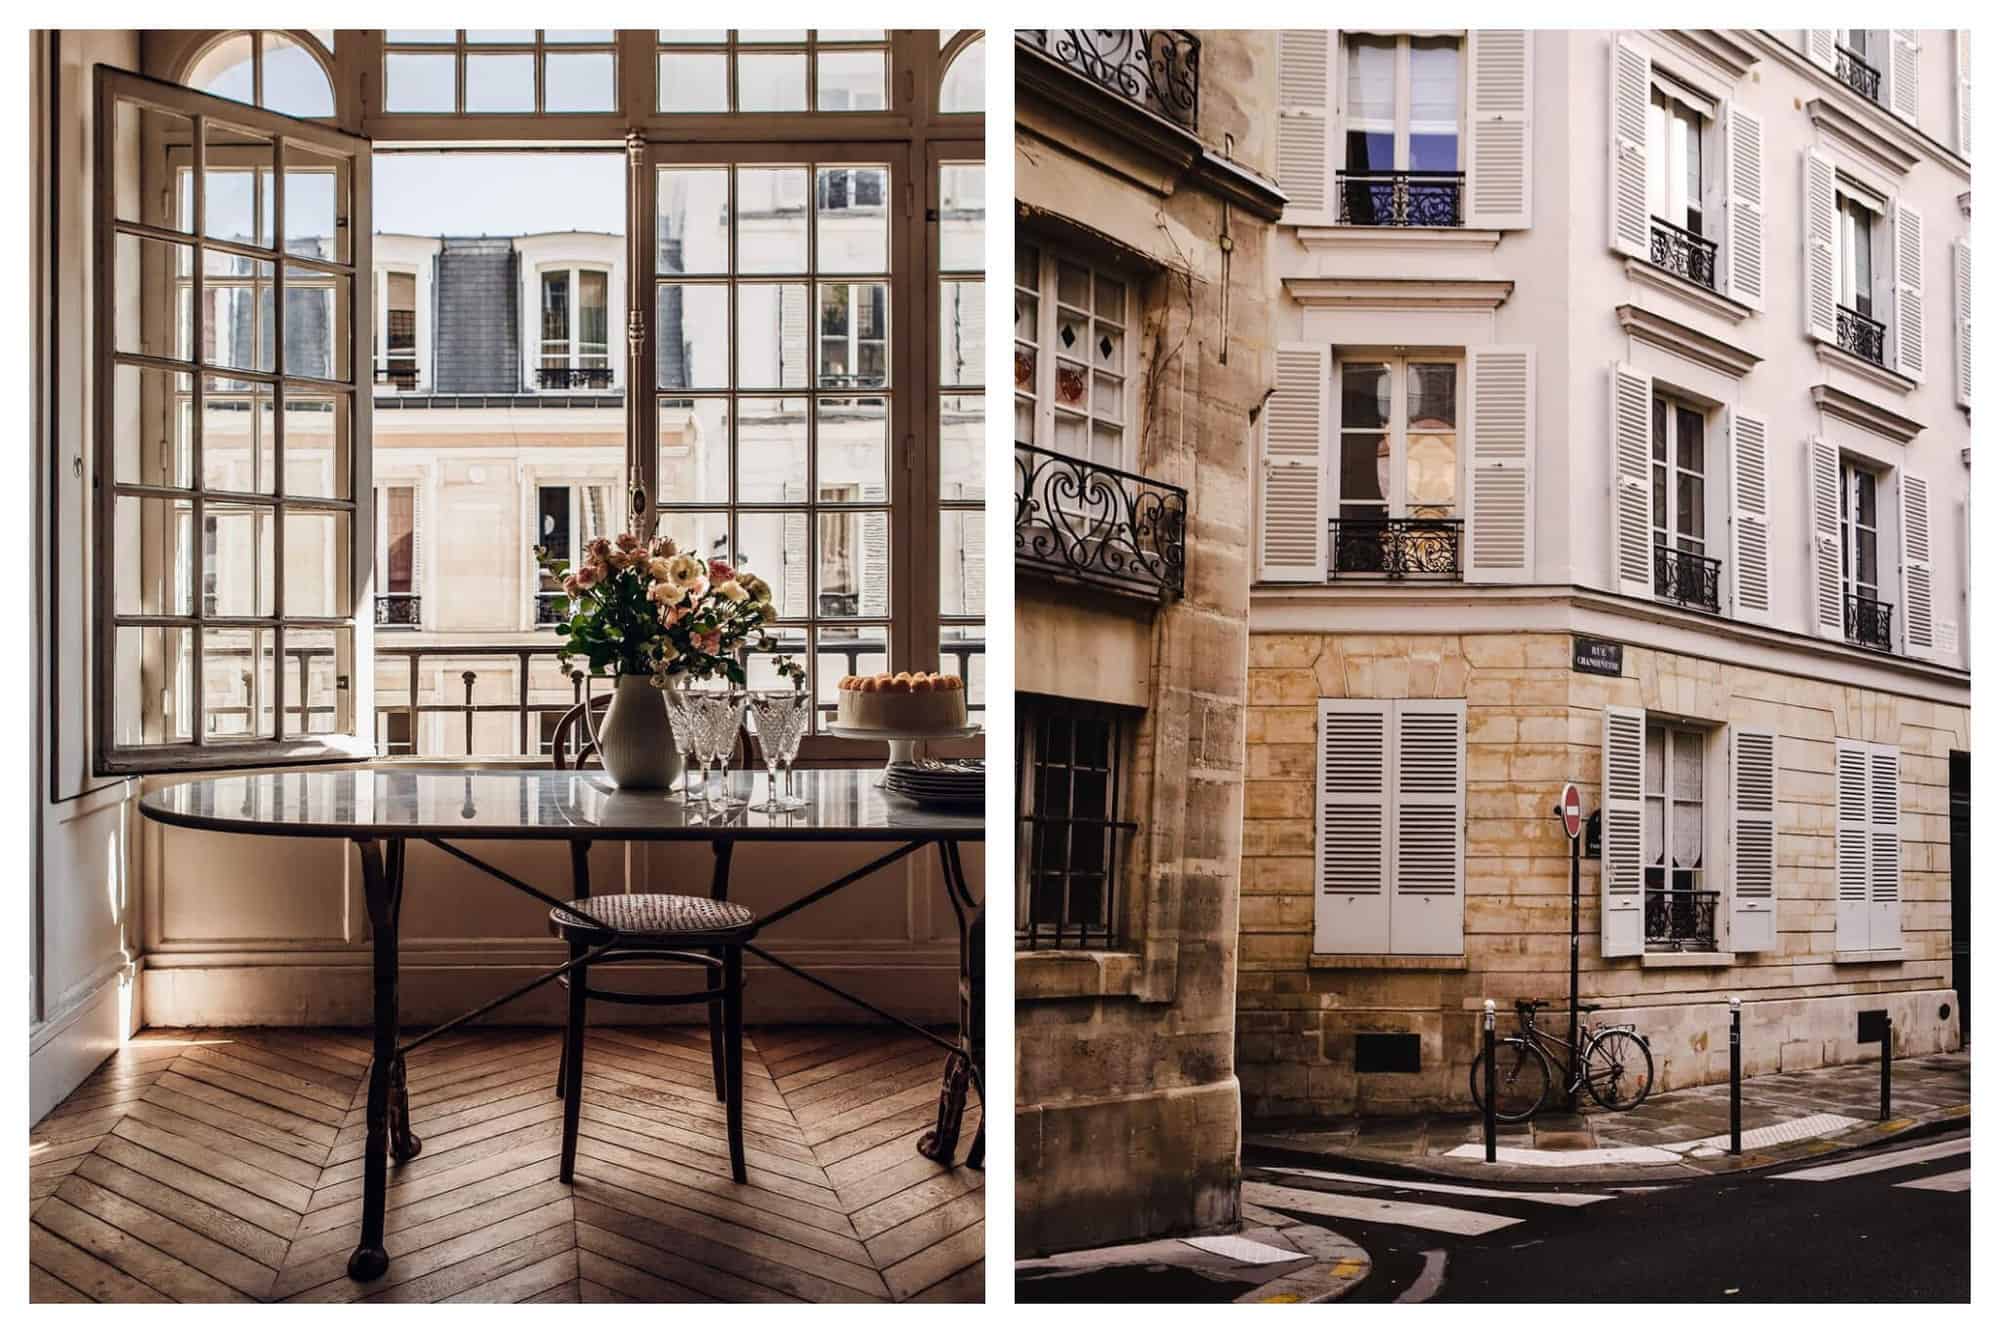 Finding Love & an Apartment in Paris